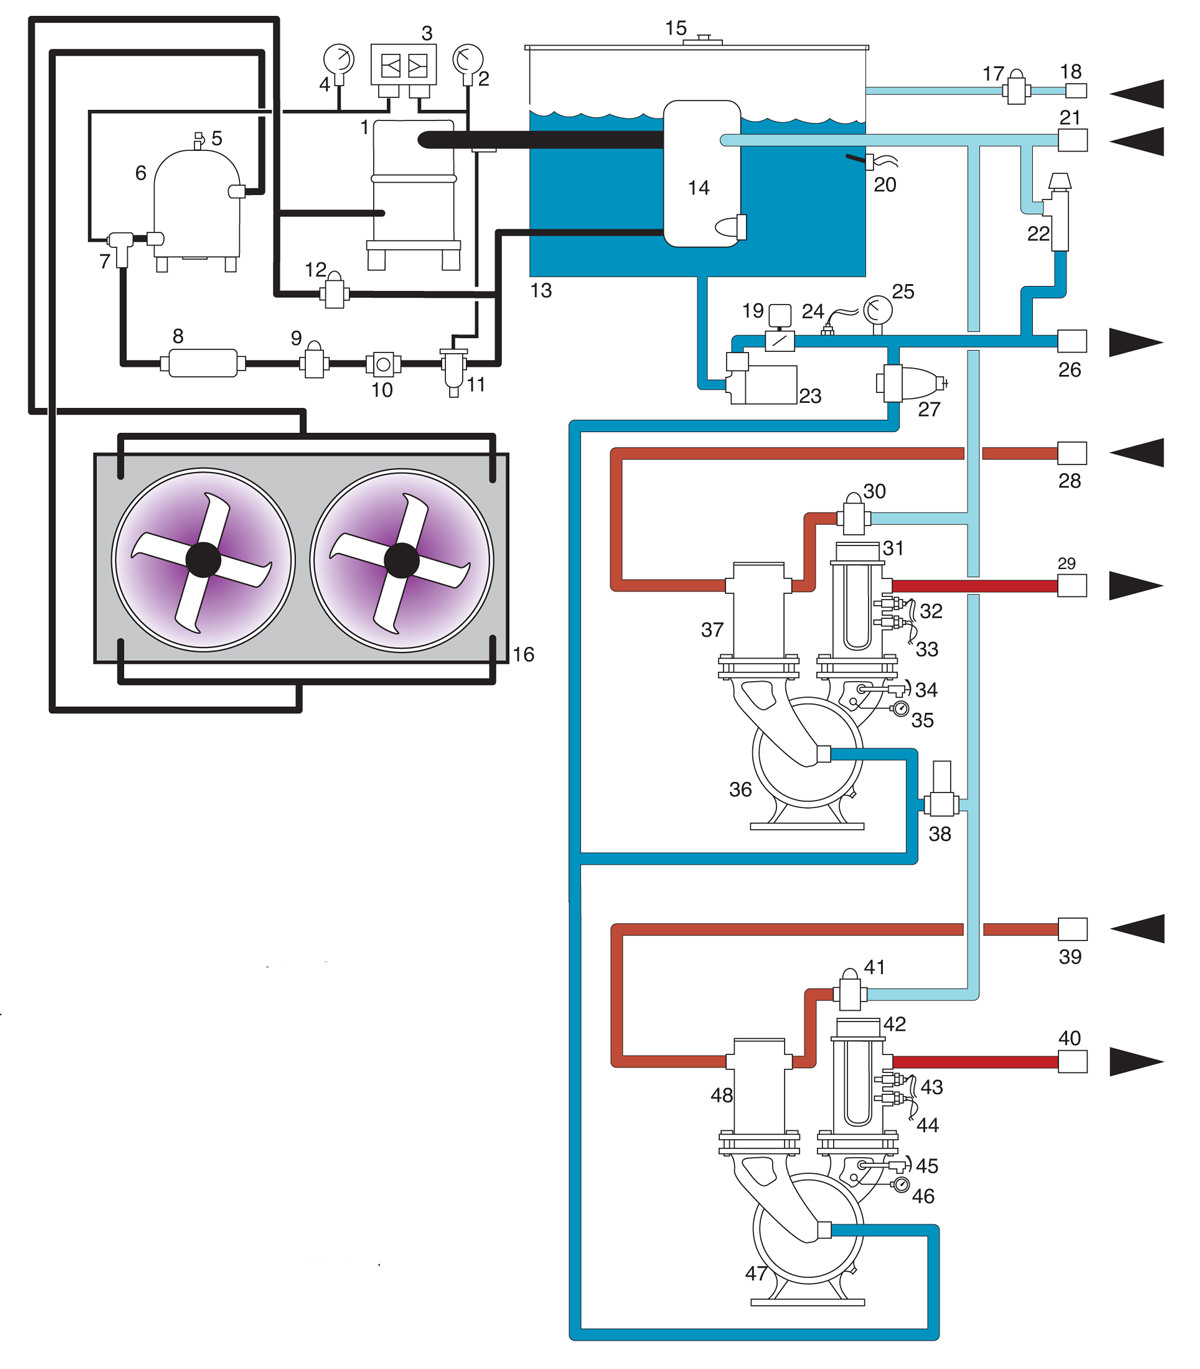 3 - 30 Ton Air-Cooled Bi-Temp Circuit Schematic